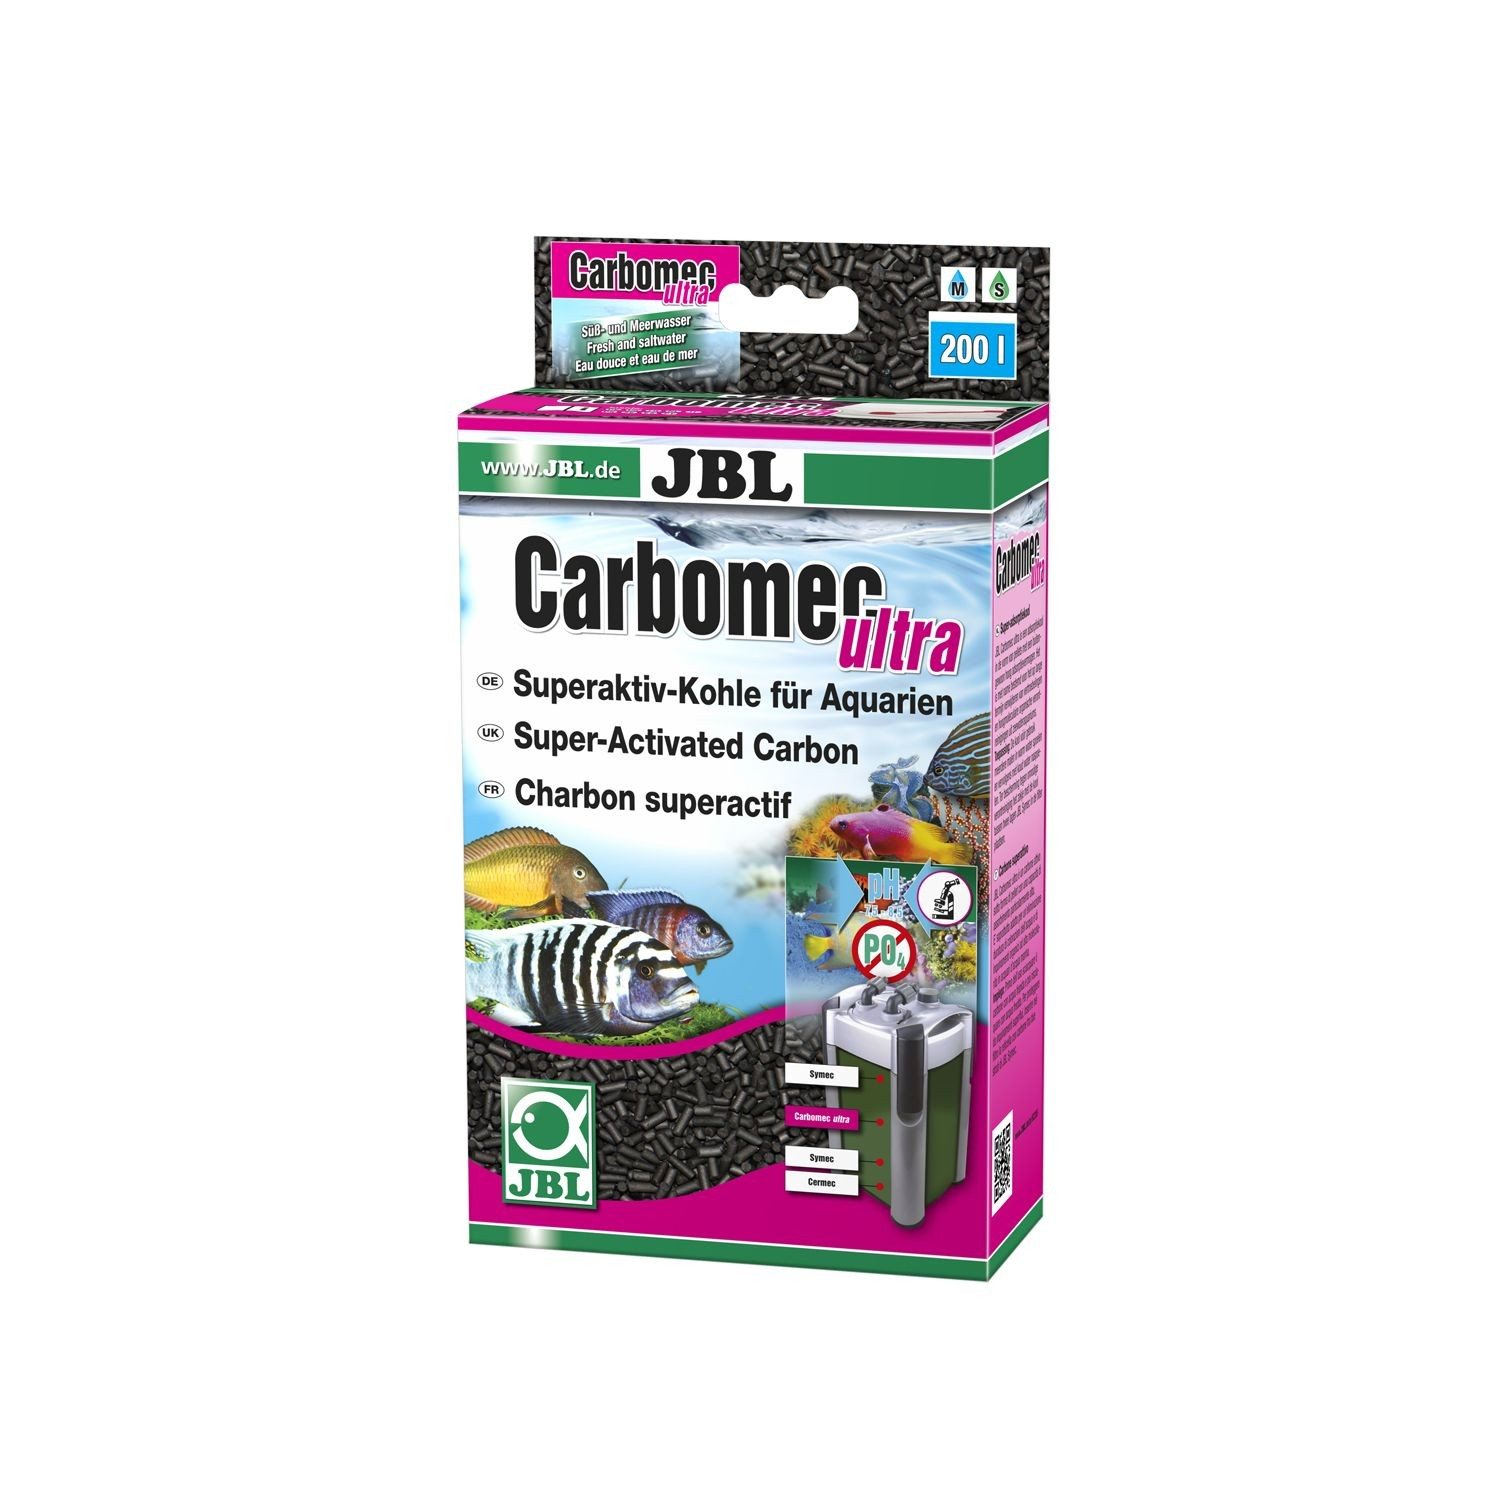 JBL Carbomec Ultra carbone super attivo per acquario